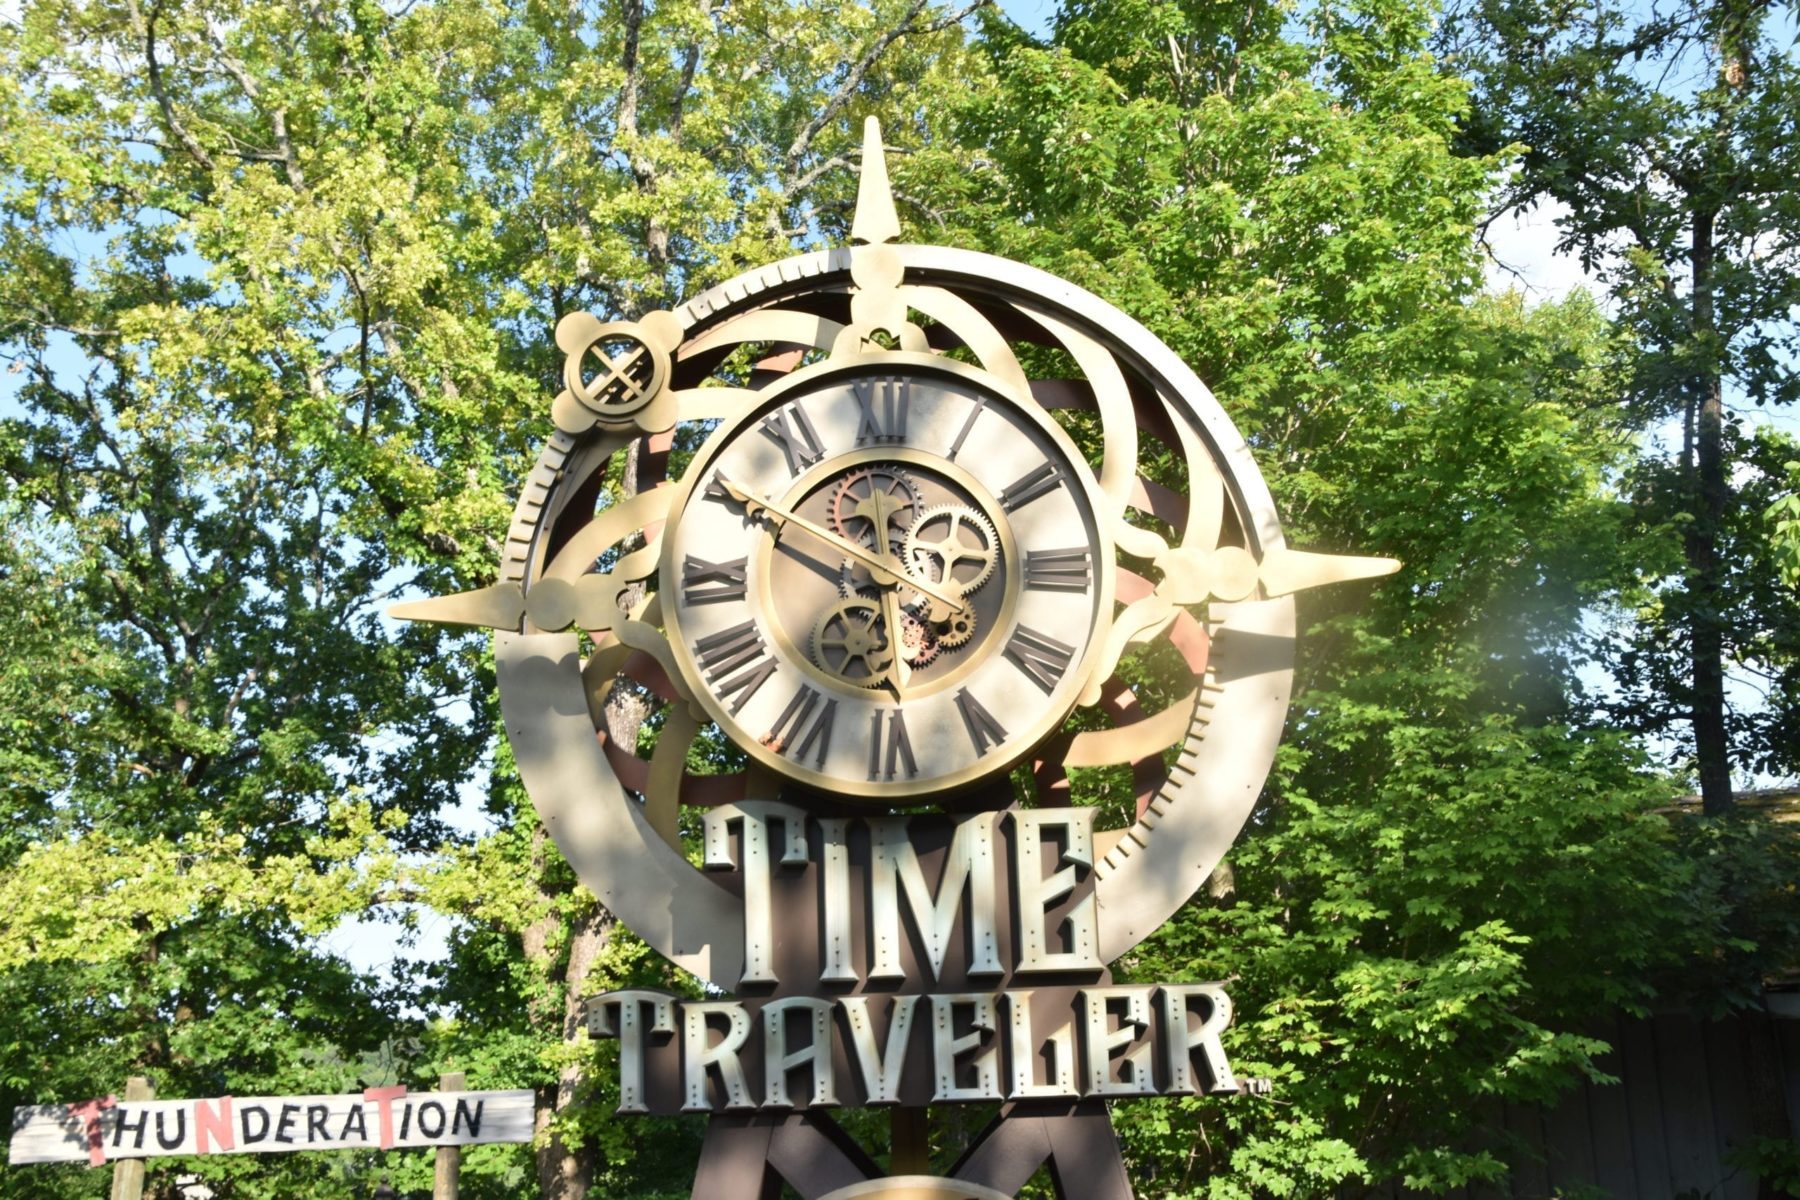 Time Traveler Silver Dollar City